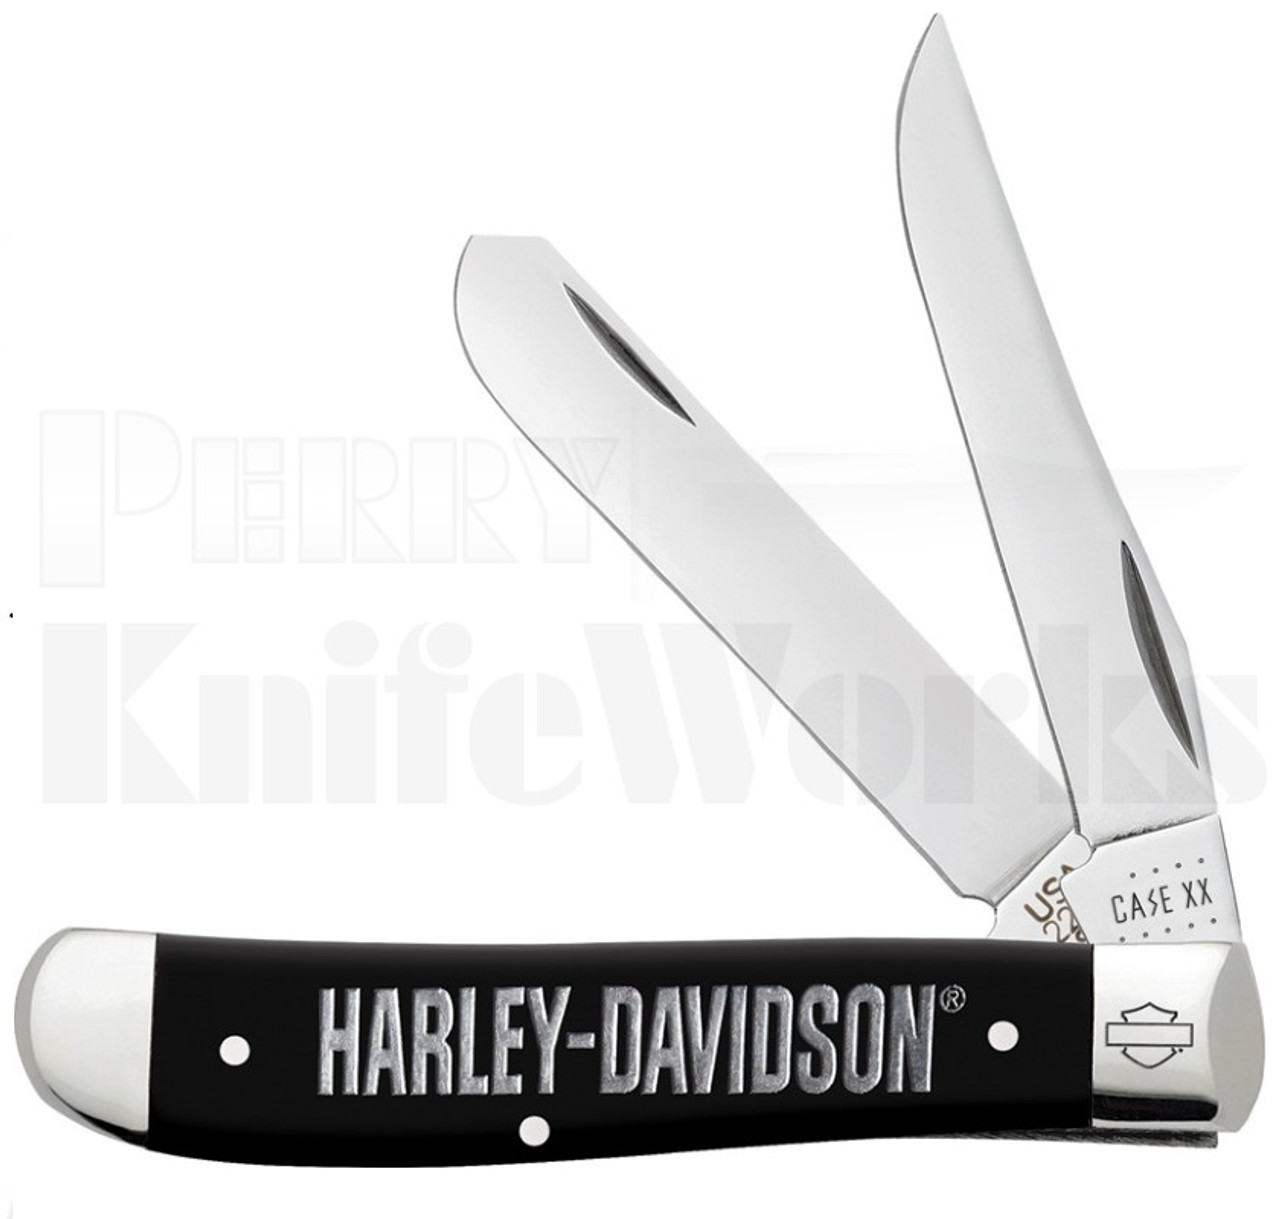 Case XX Harley Davidson Mini Trapper Knife Black 52231 l For Sale